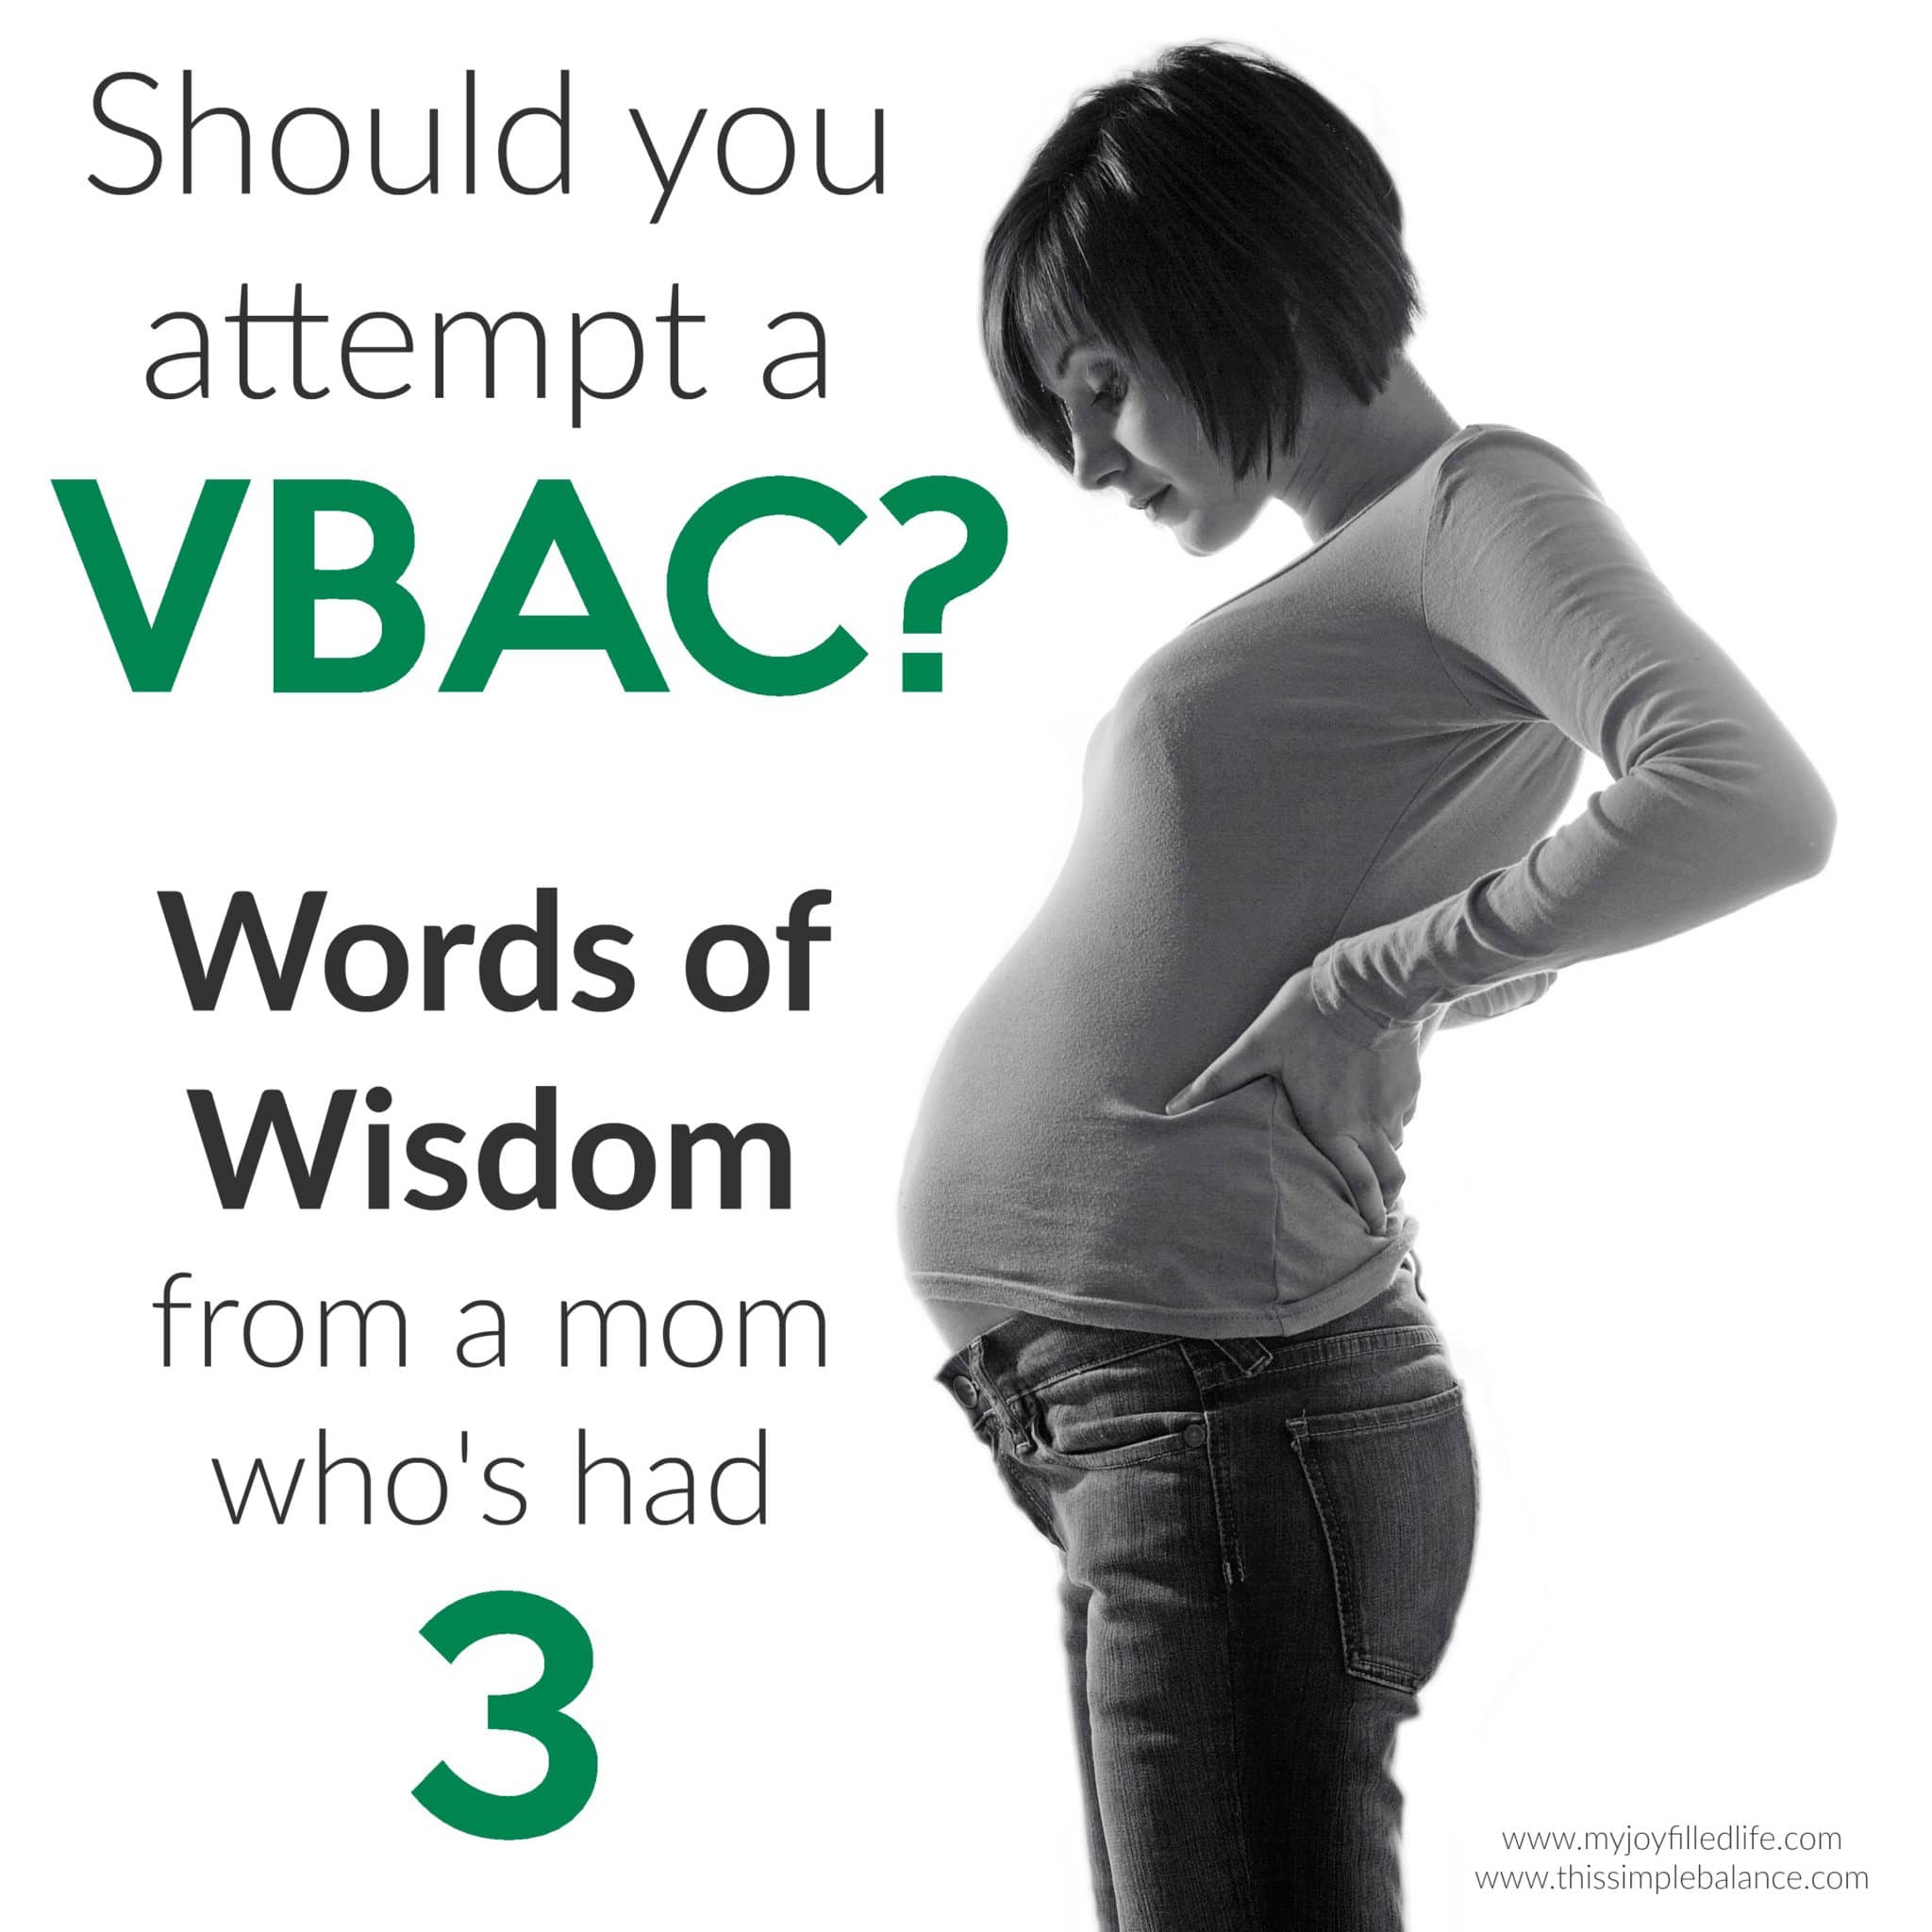 Should You Attempt a VBAC?